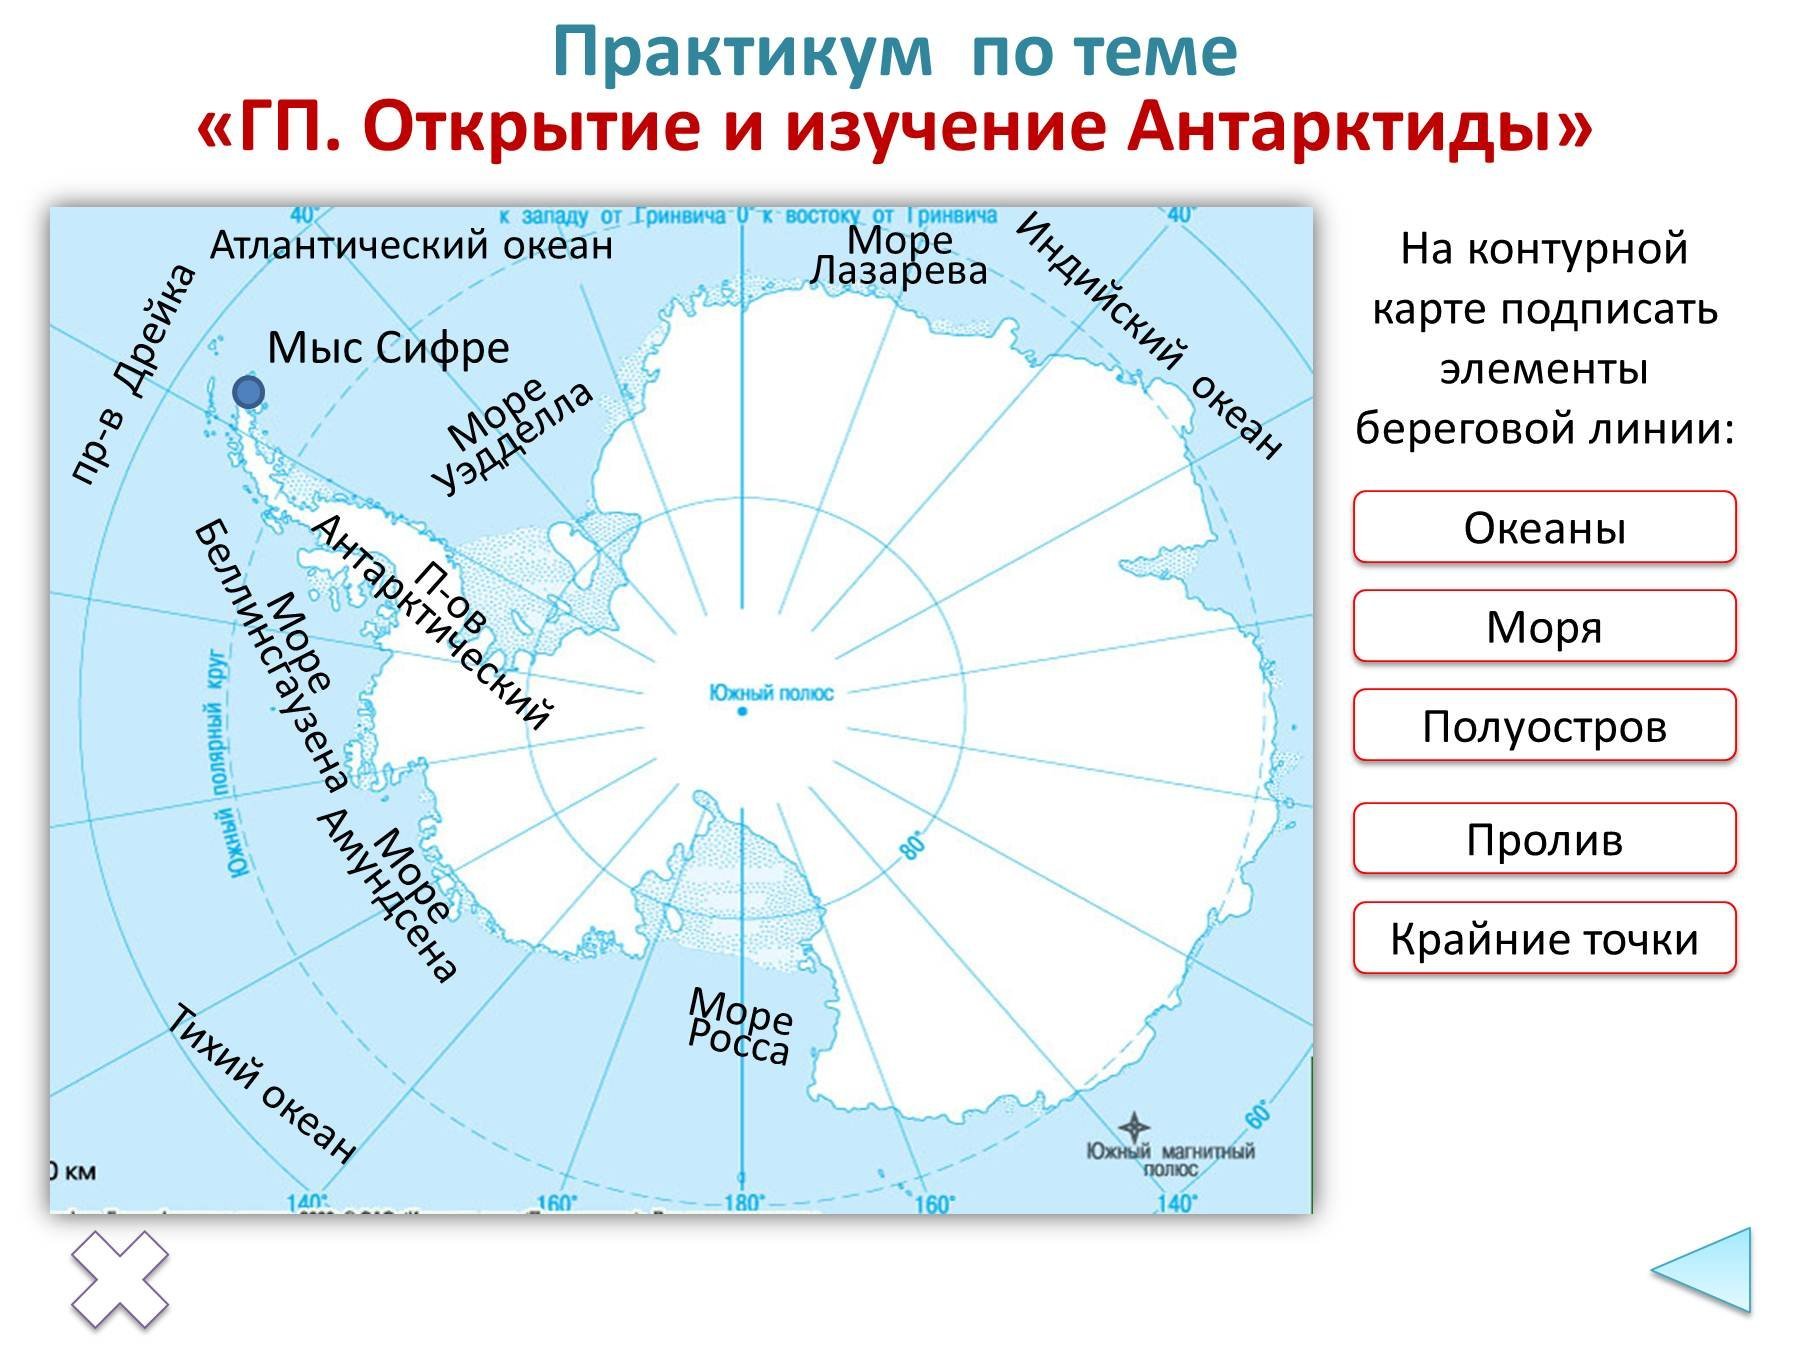 Крайняя точка антарктиды на карте. Моря: Амундсена, Беллинсгаузена, Росса, Уэдделла.. Мыс Сифре на карте Антарктиды. Береговая линия Антарктиды на контурной карте. Открытие моря Уэдделла.